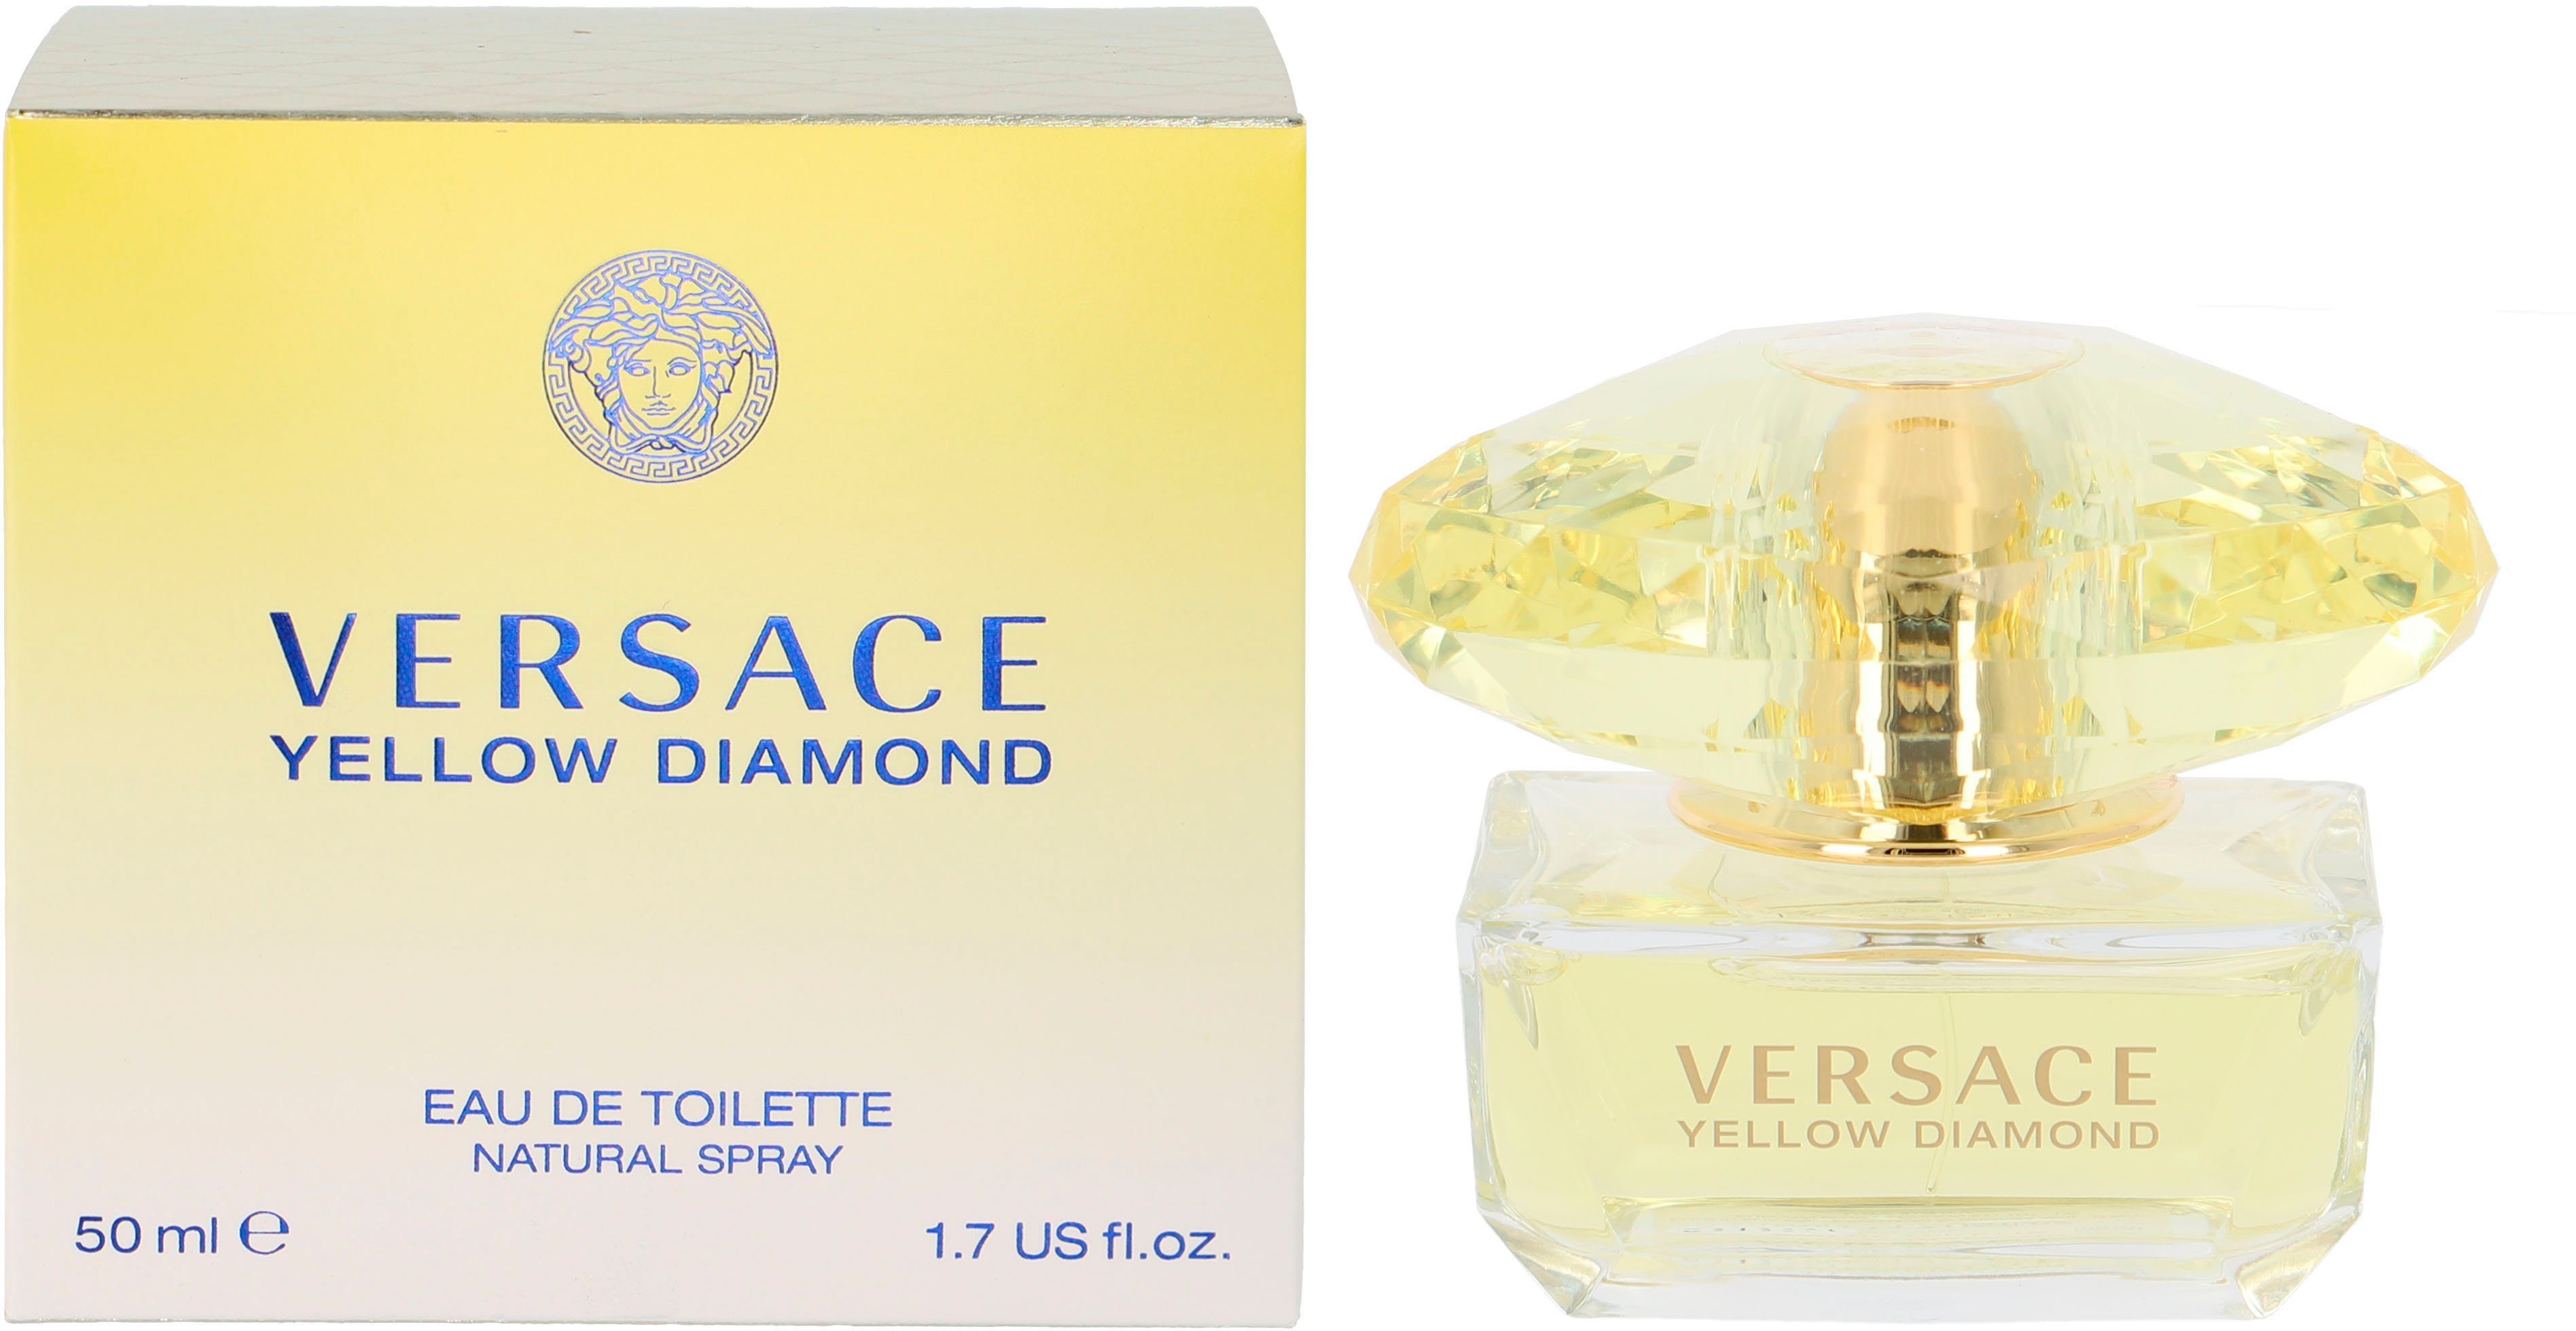 Yellow Diamonds Eau de Versace Toilette